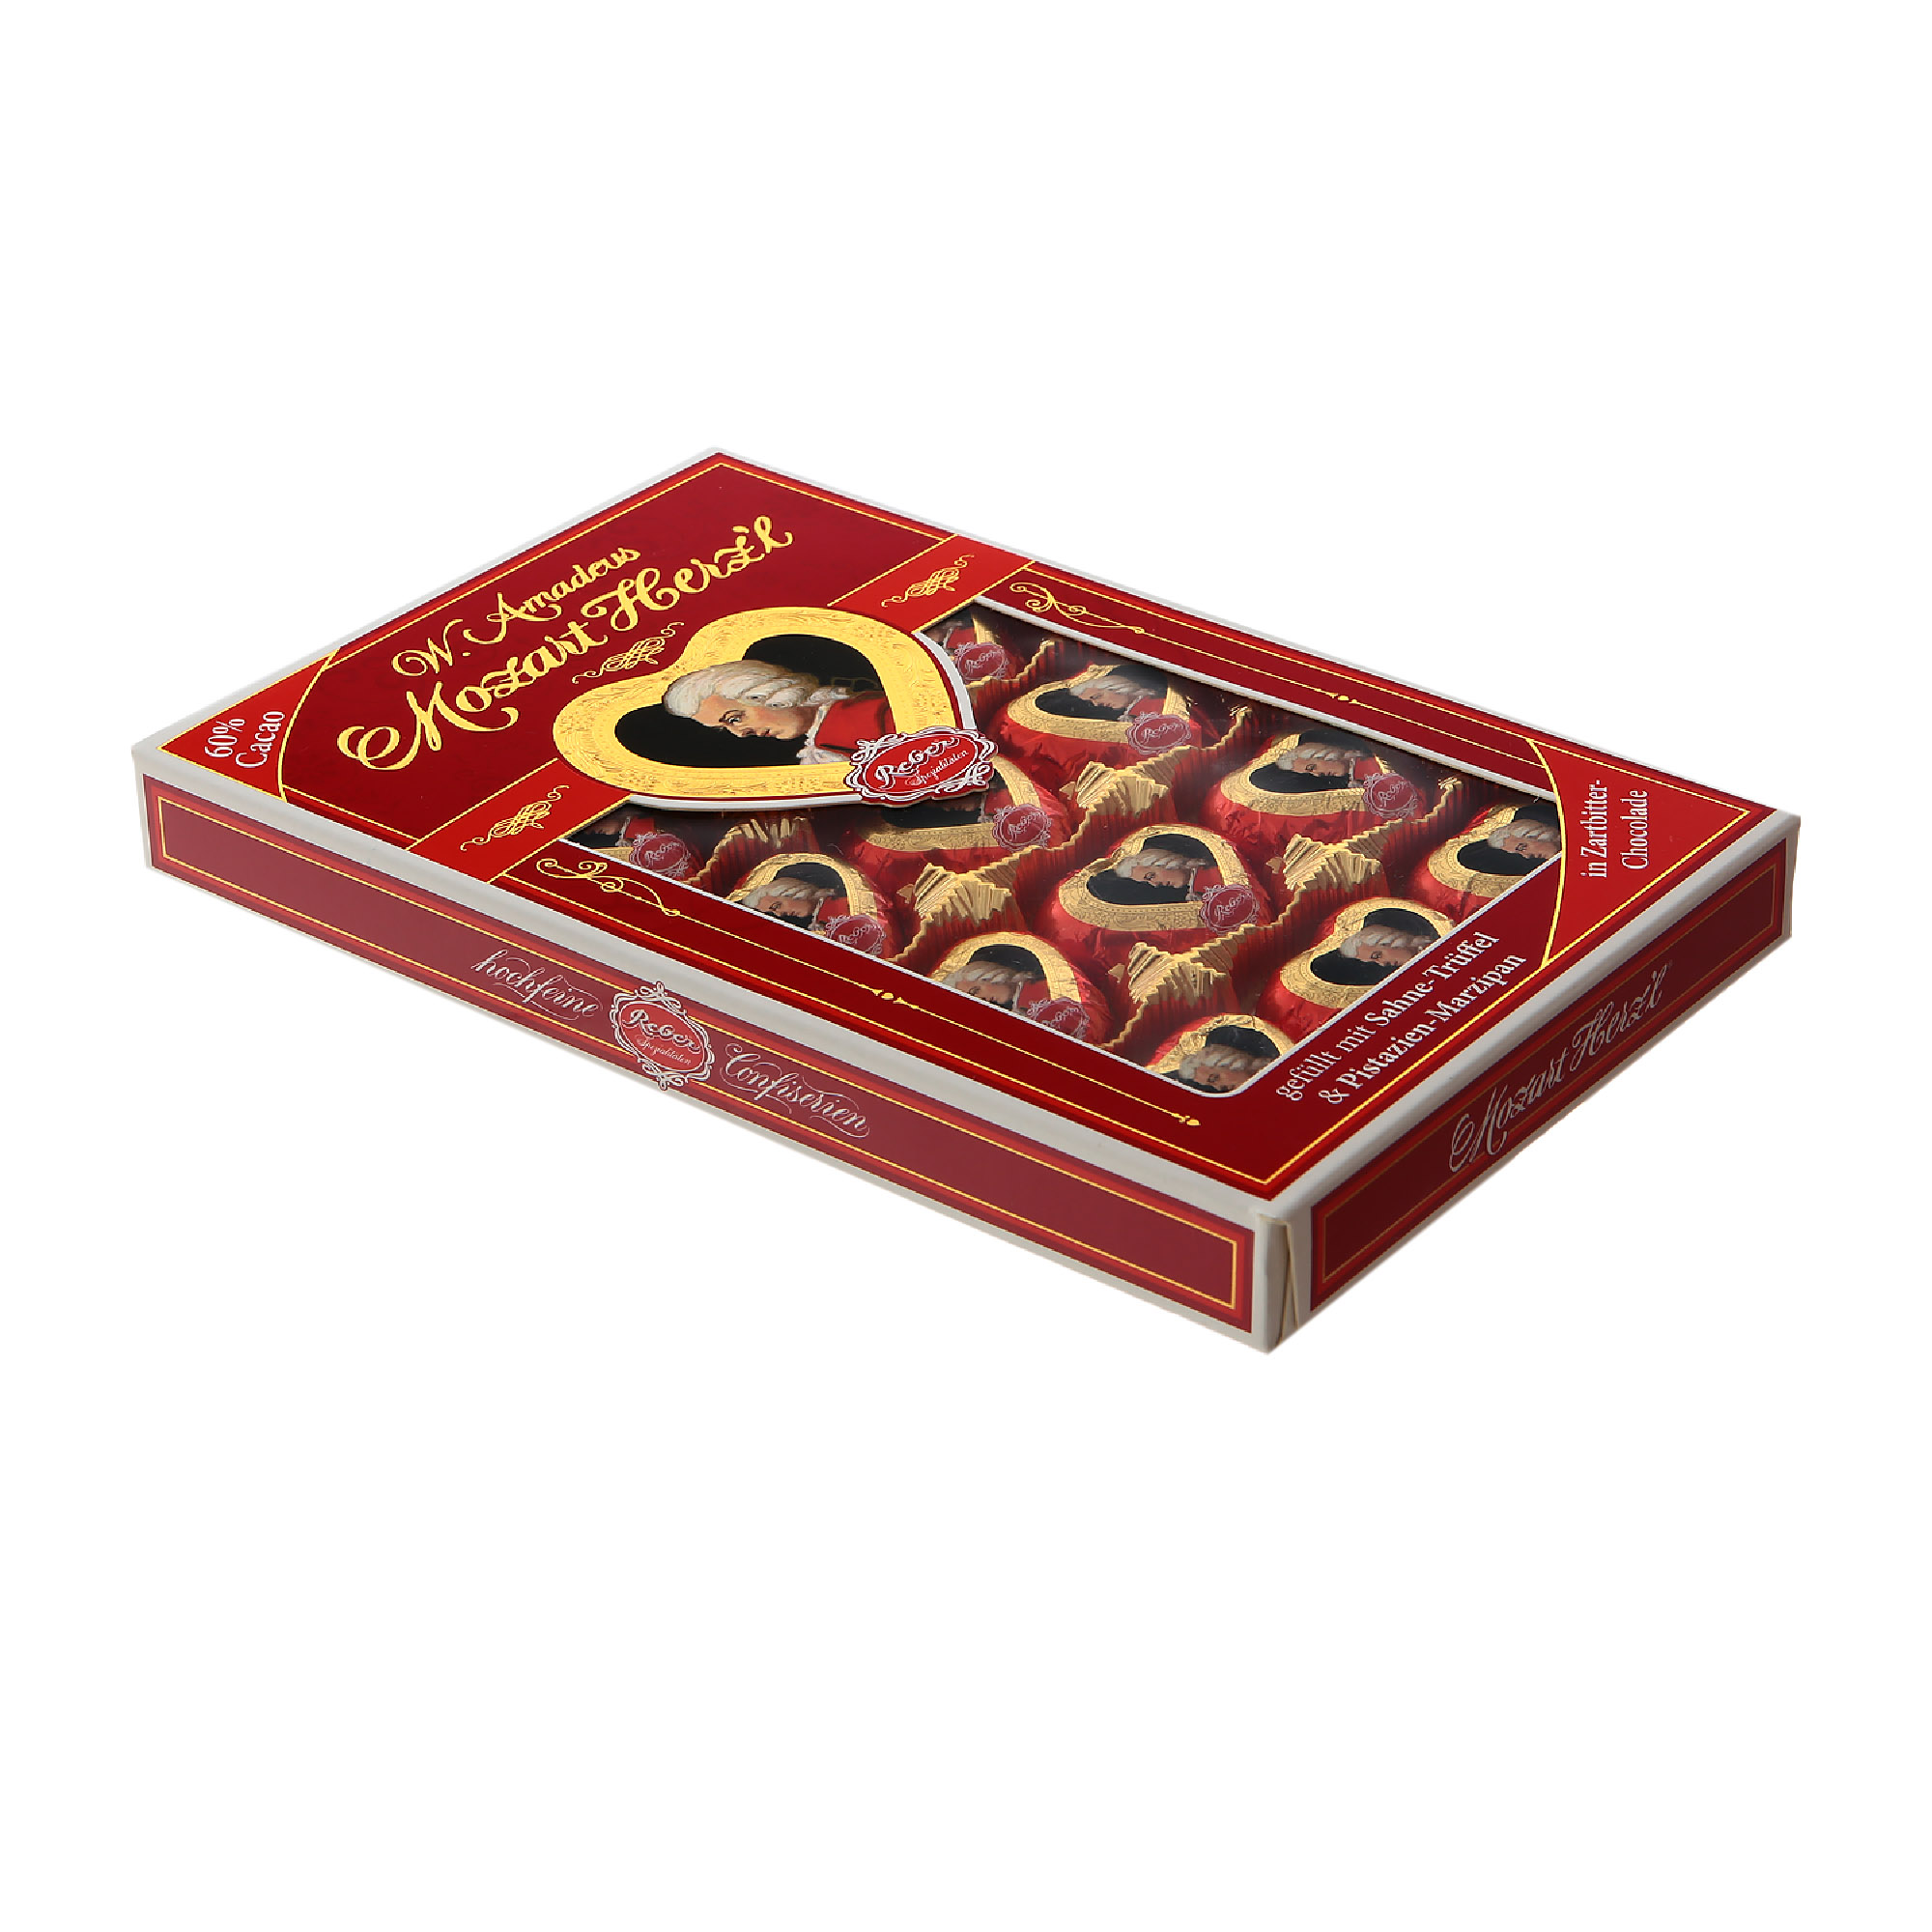 Сердечки шоколадные Reber Моцарт 150 г набор конфет с окном reber моцарт 350 г